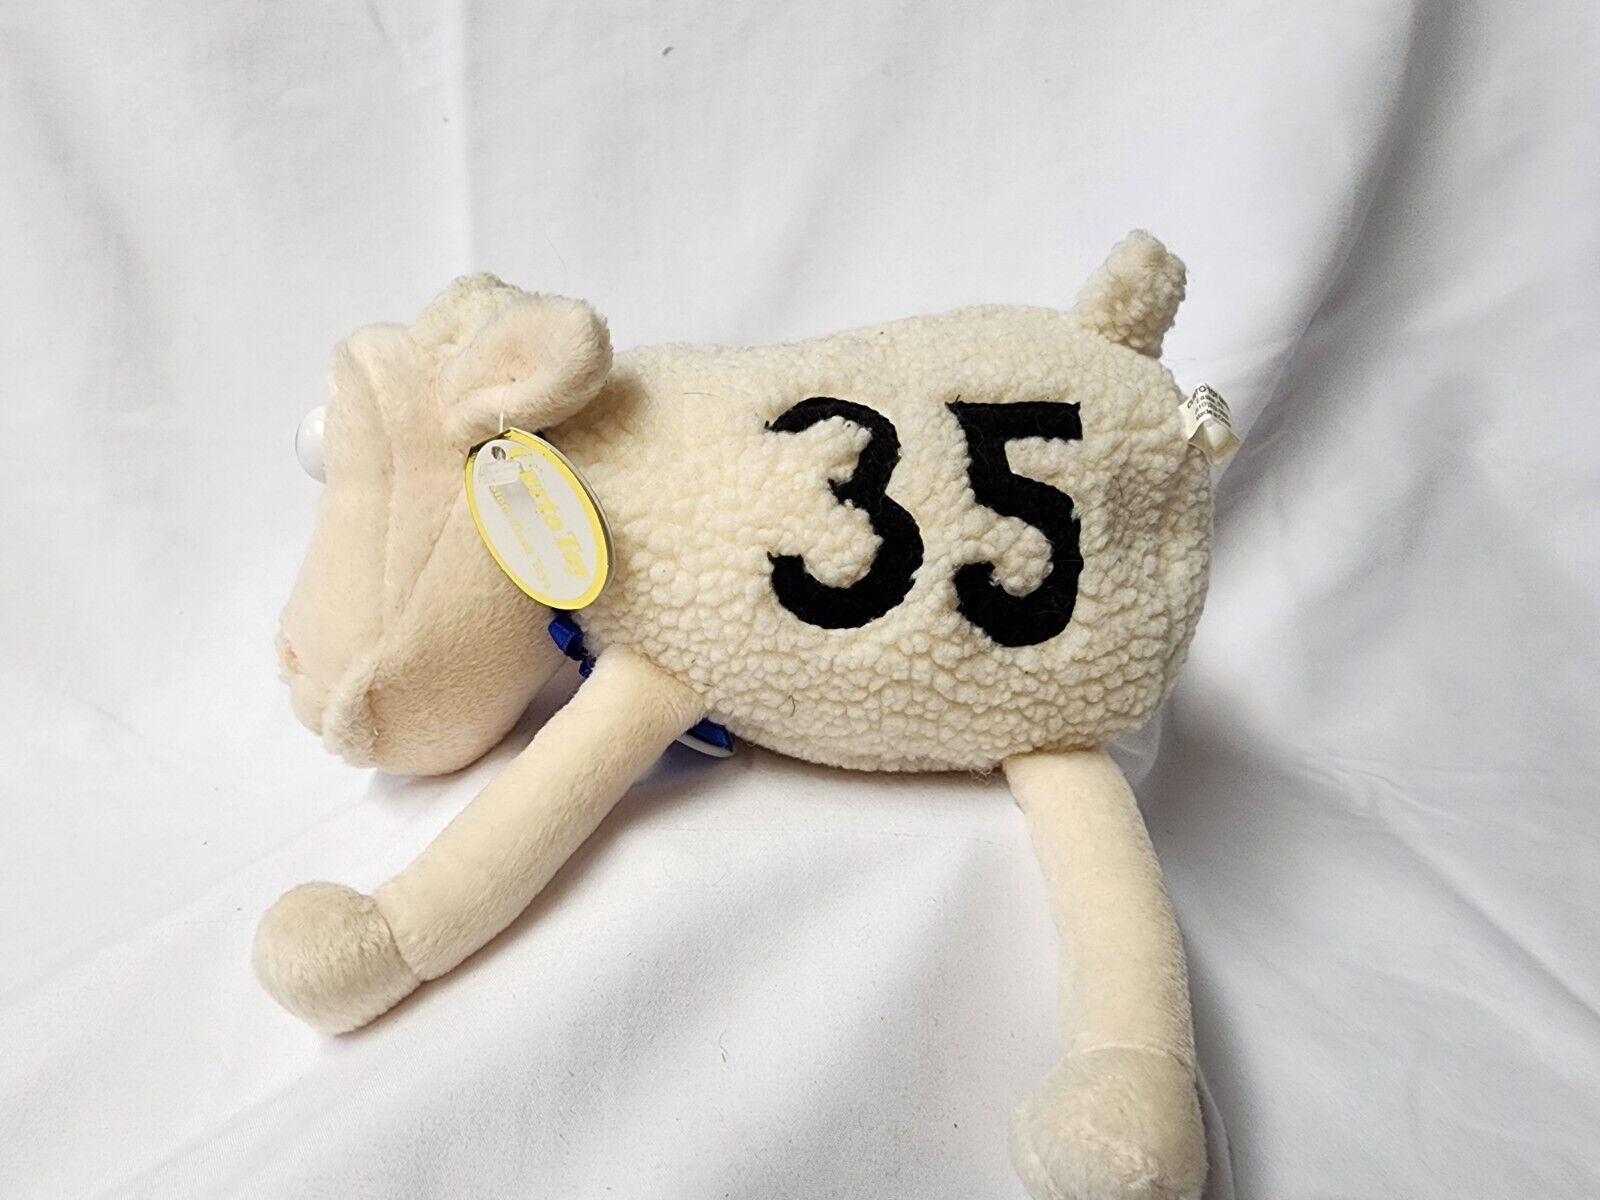 Serta Mattress plush counting sheep # 35 original tags Curto Toy NWT - $12.86